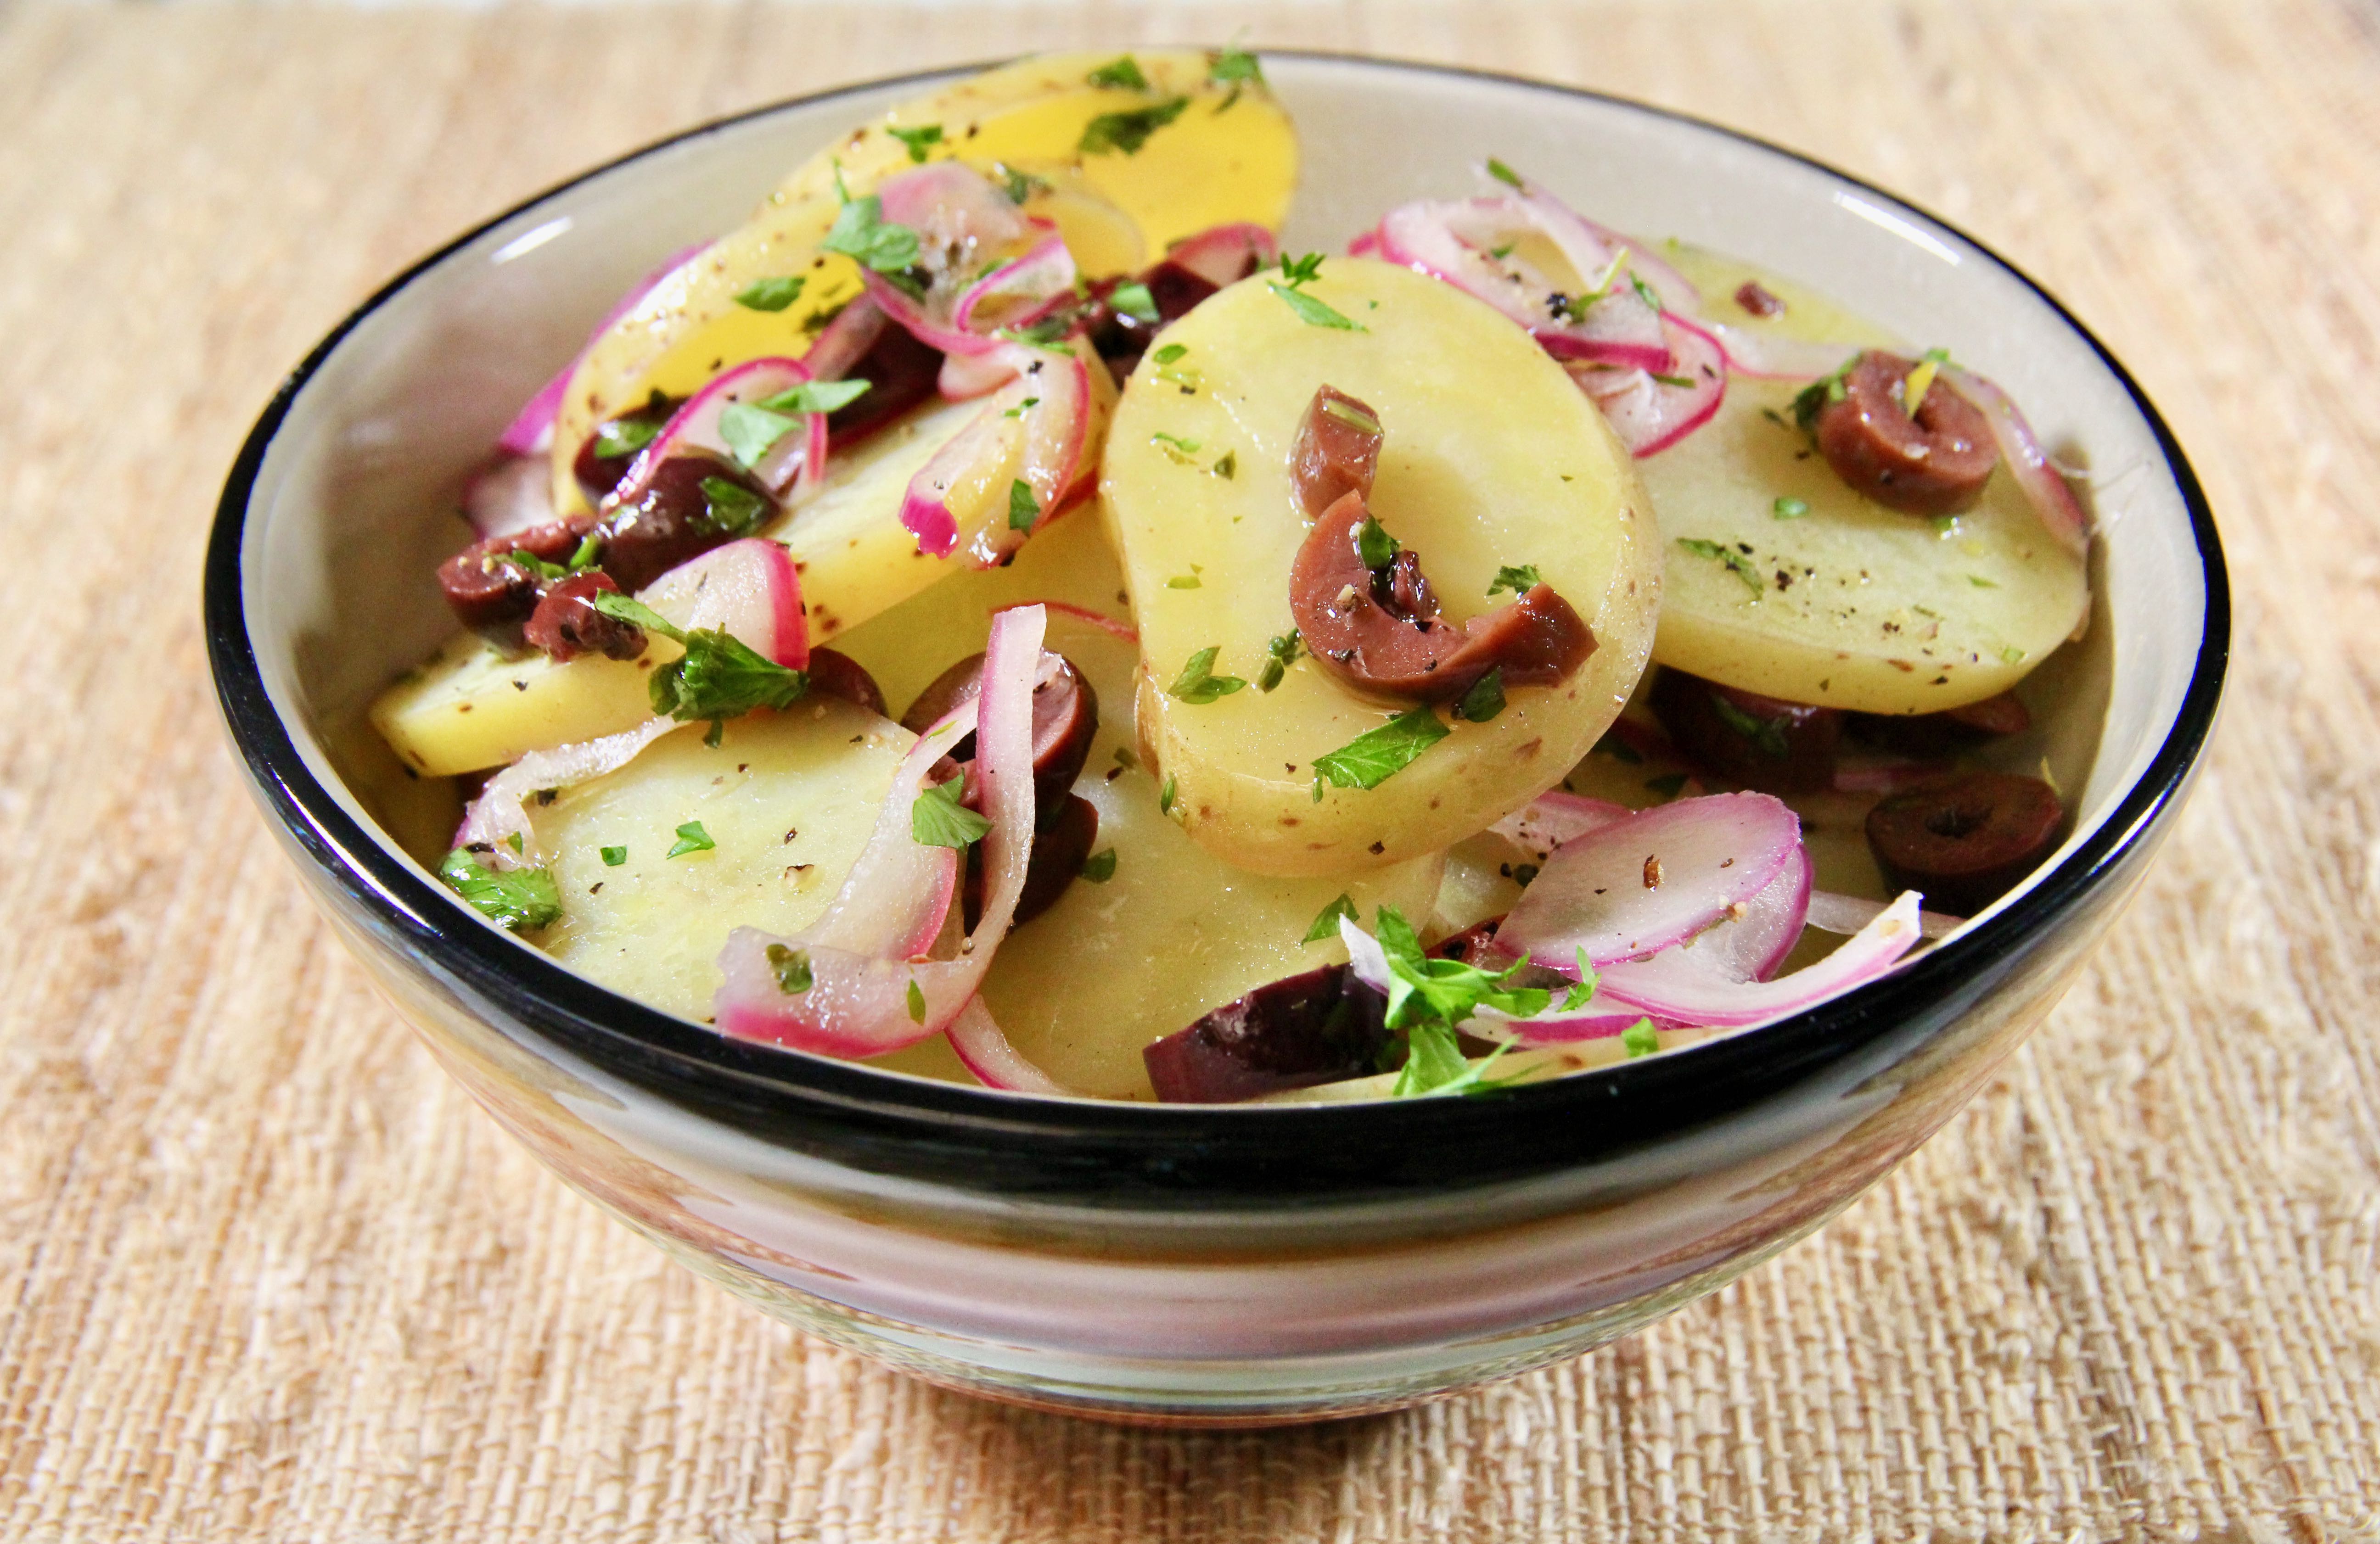  admiring Potato Salad  similar to Olives